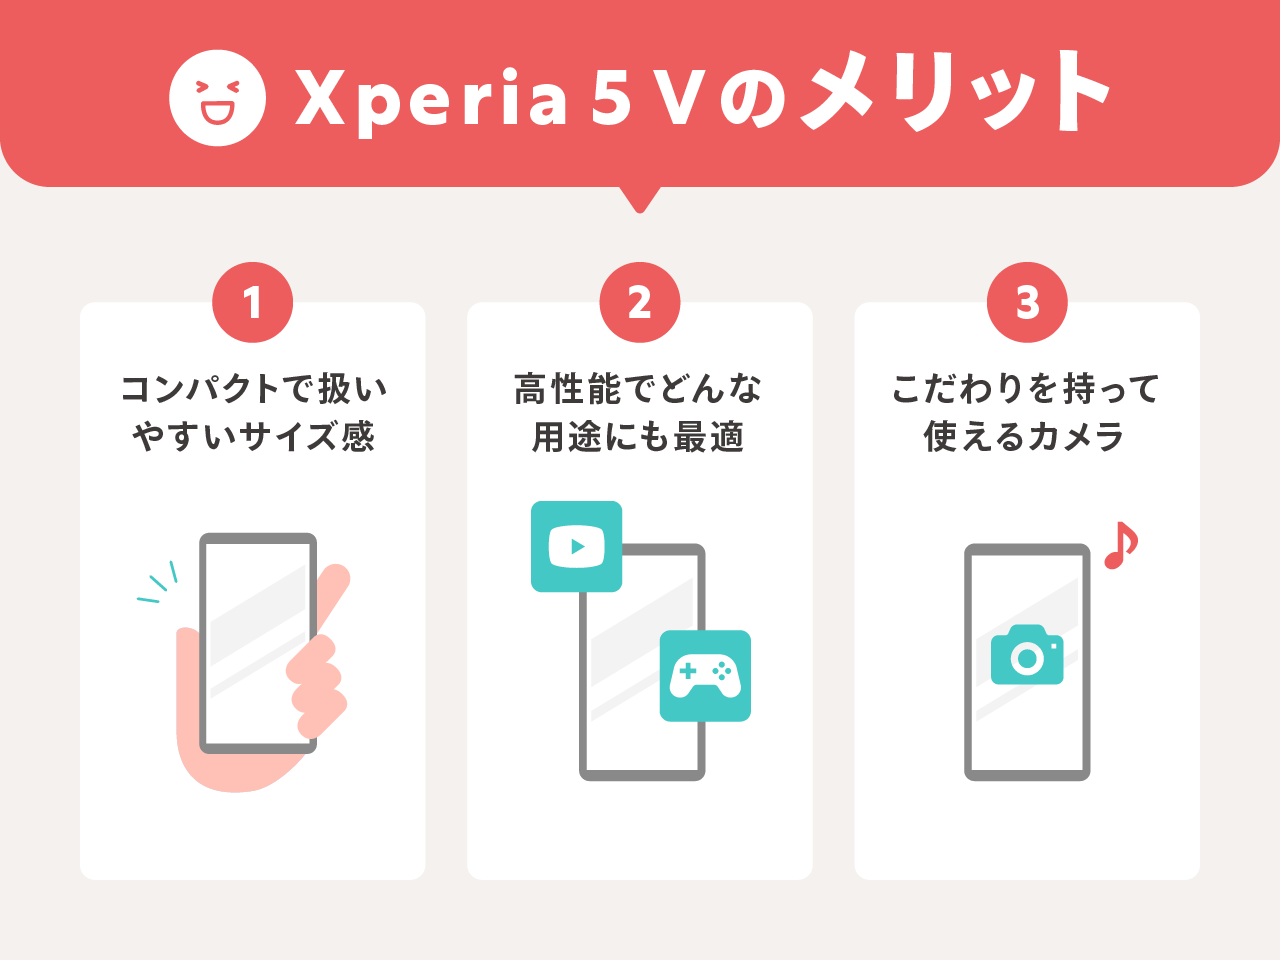 Xperia 5 Vのメリット